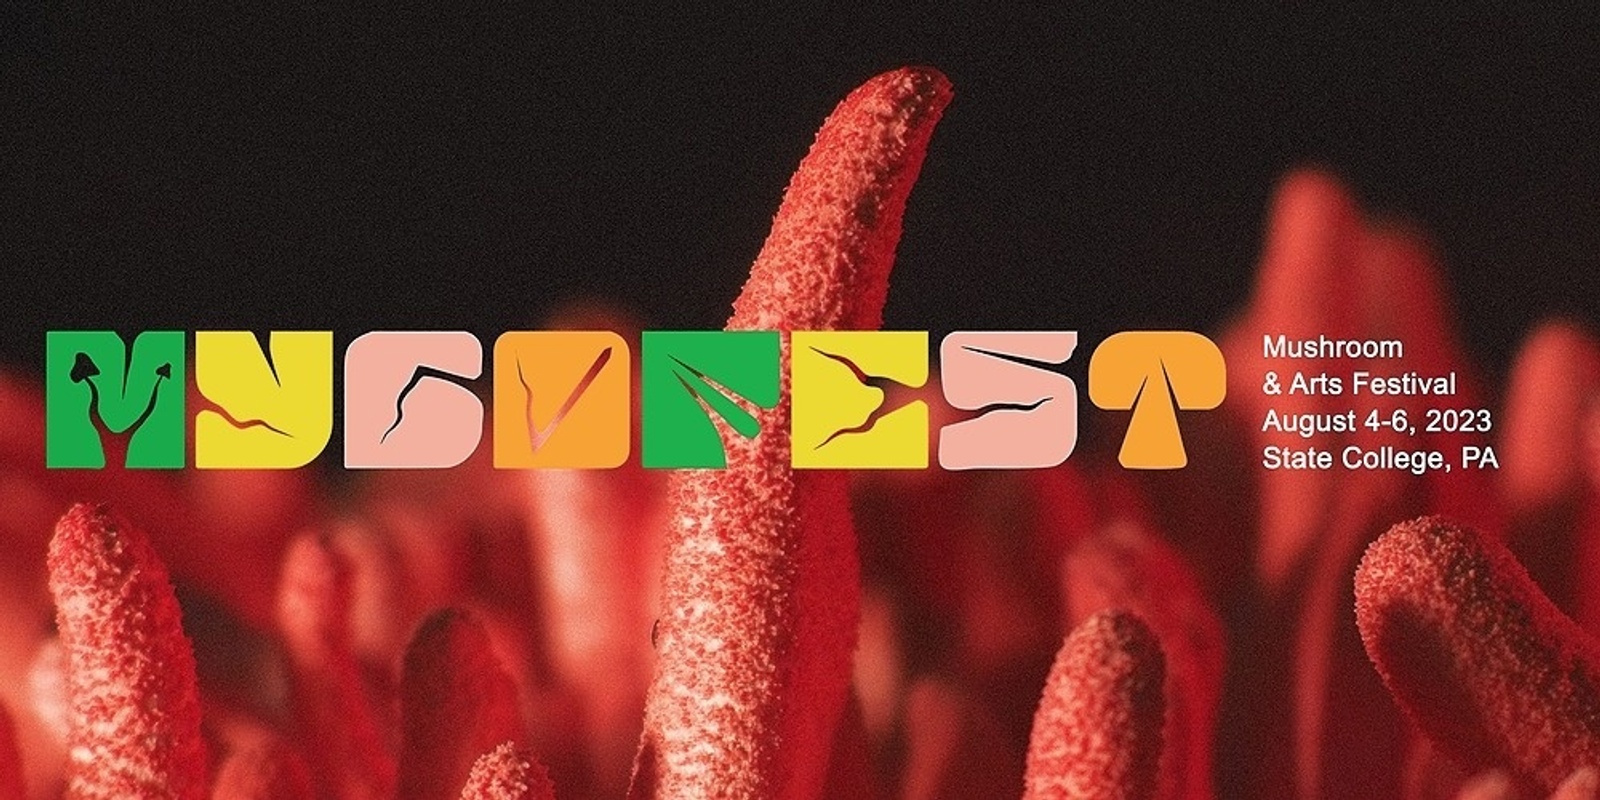 MycoFest : A Mushroom & Arts Festival